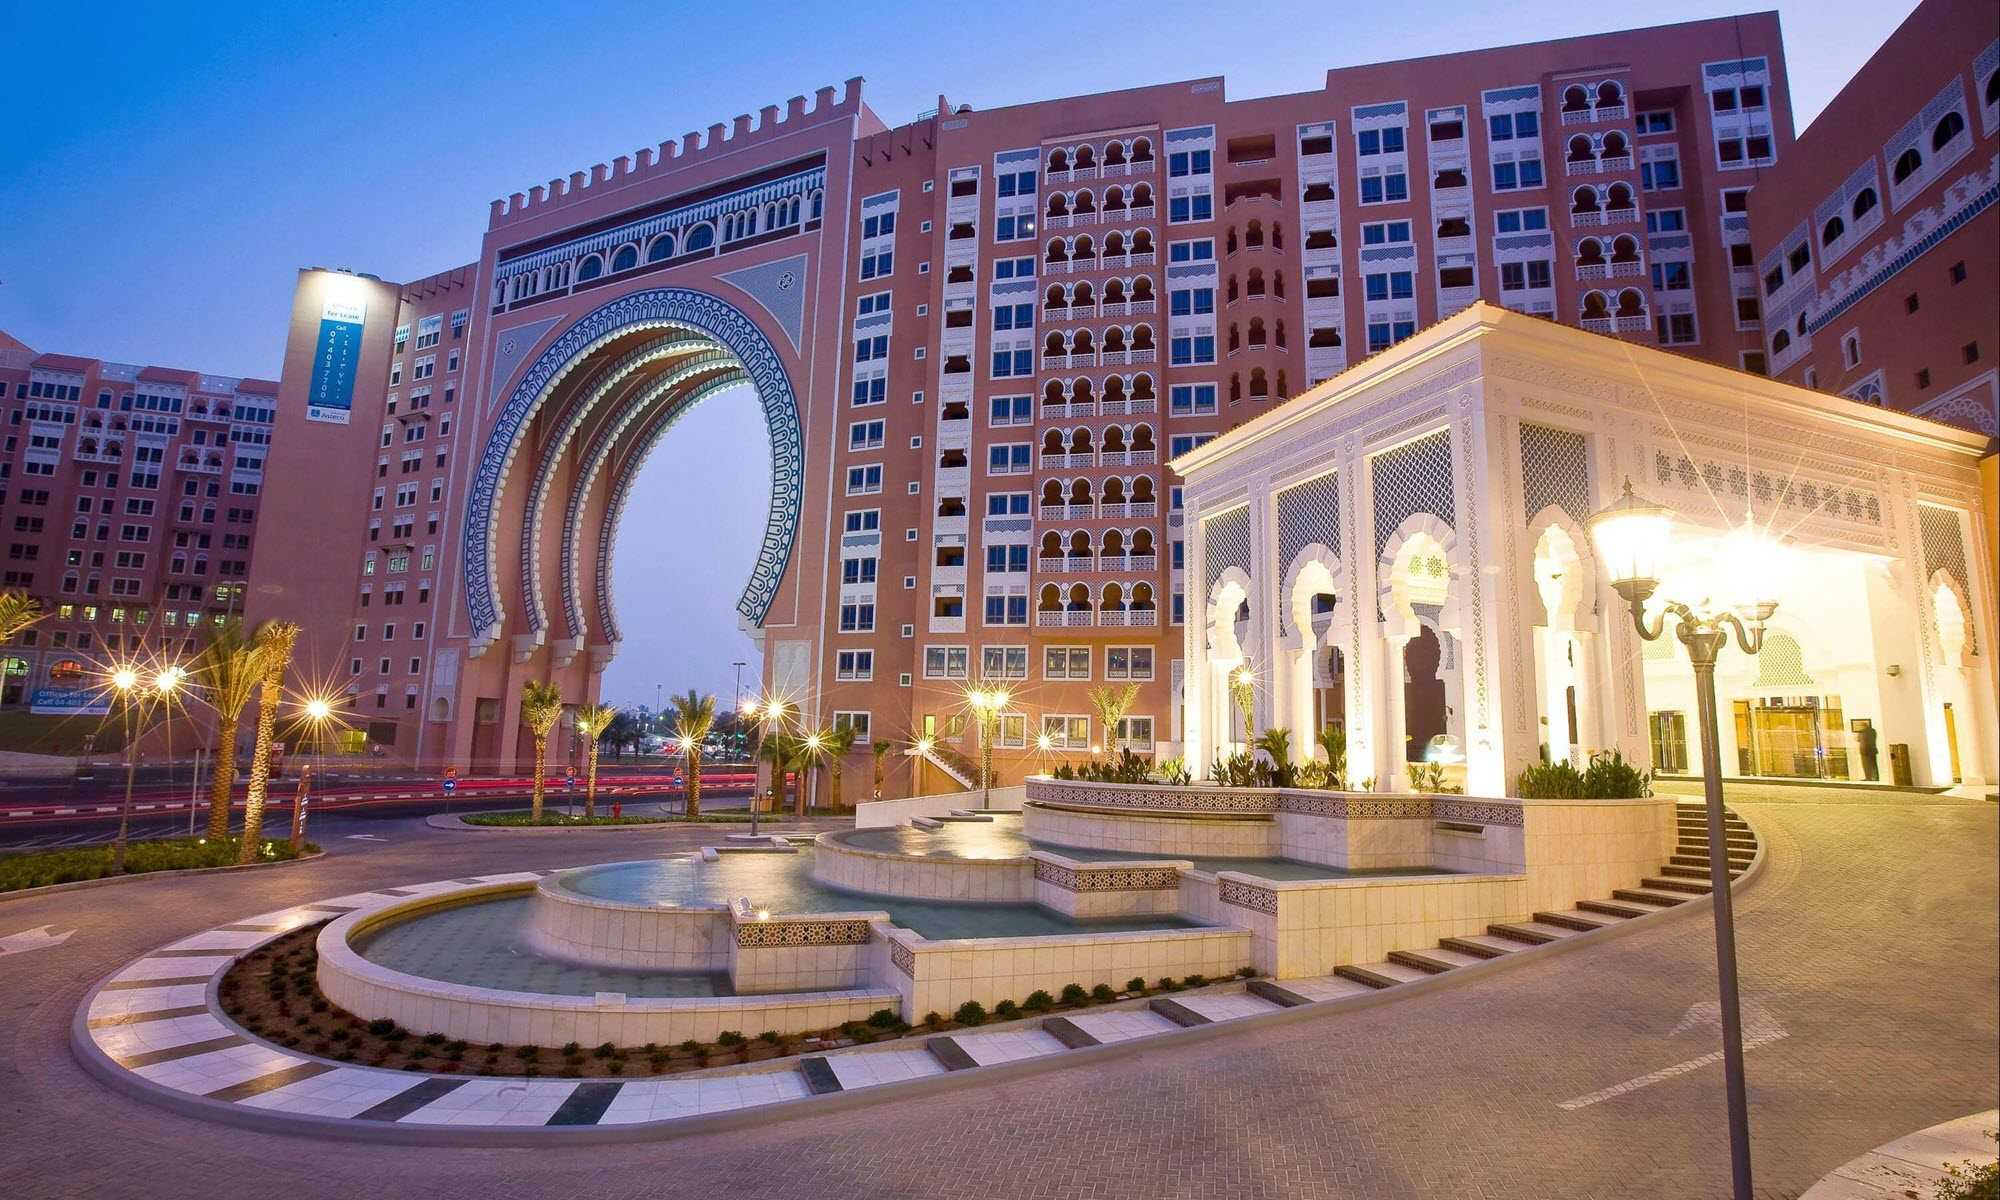 Oaks IBN Battuta Gate Hotel Dubai? Outside Building